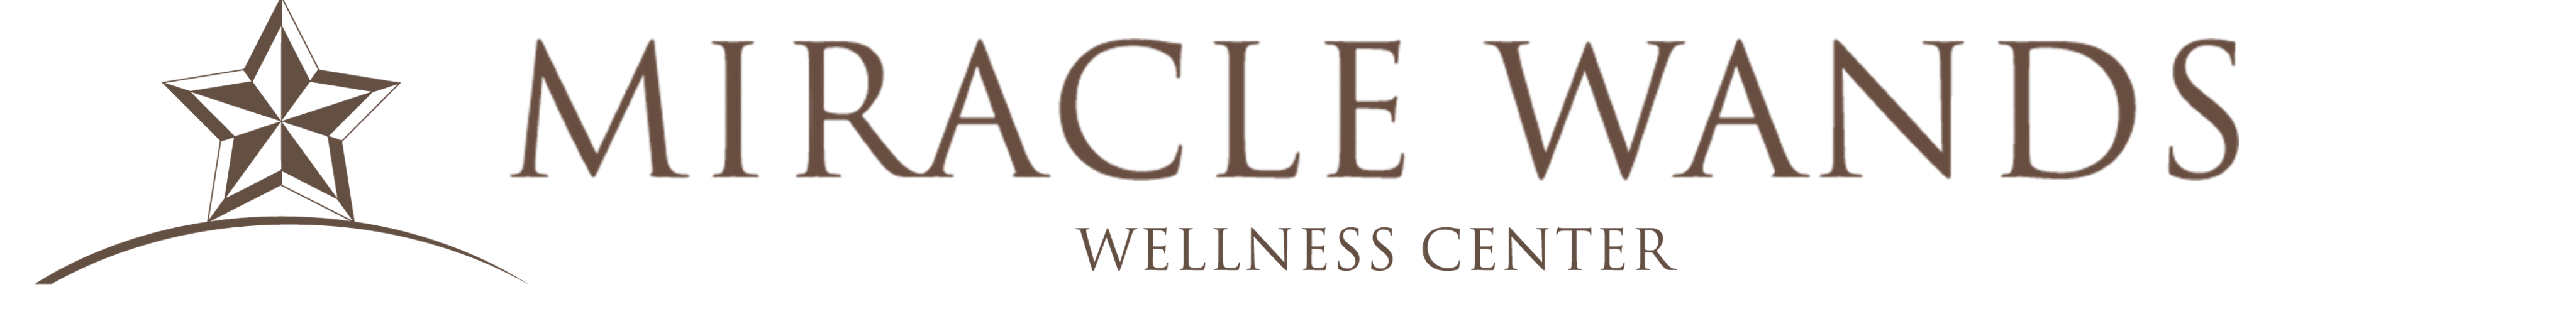 Miracle Wands Wellness Center